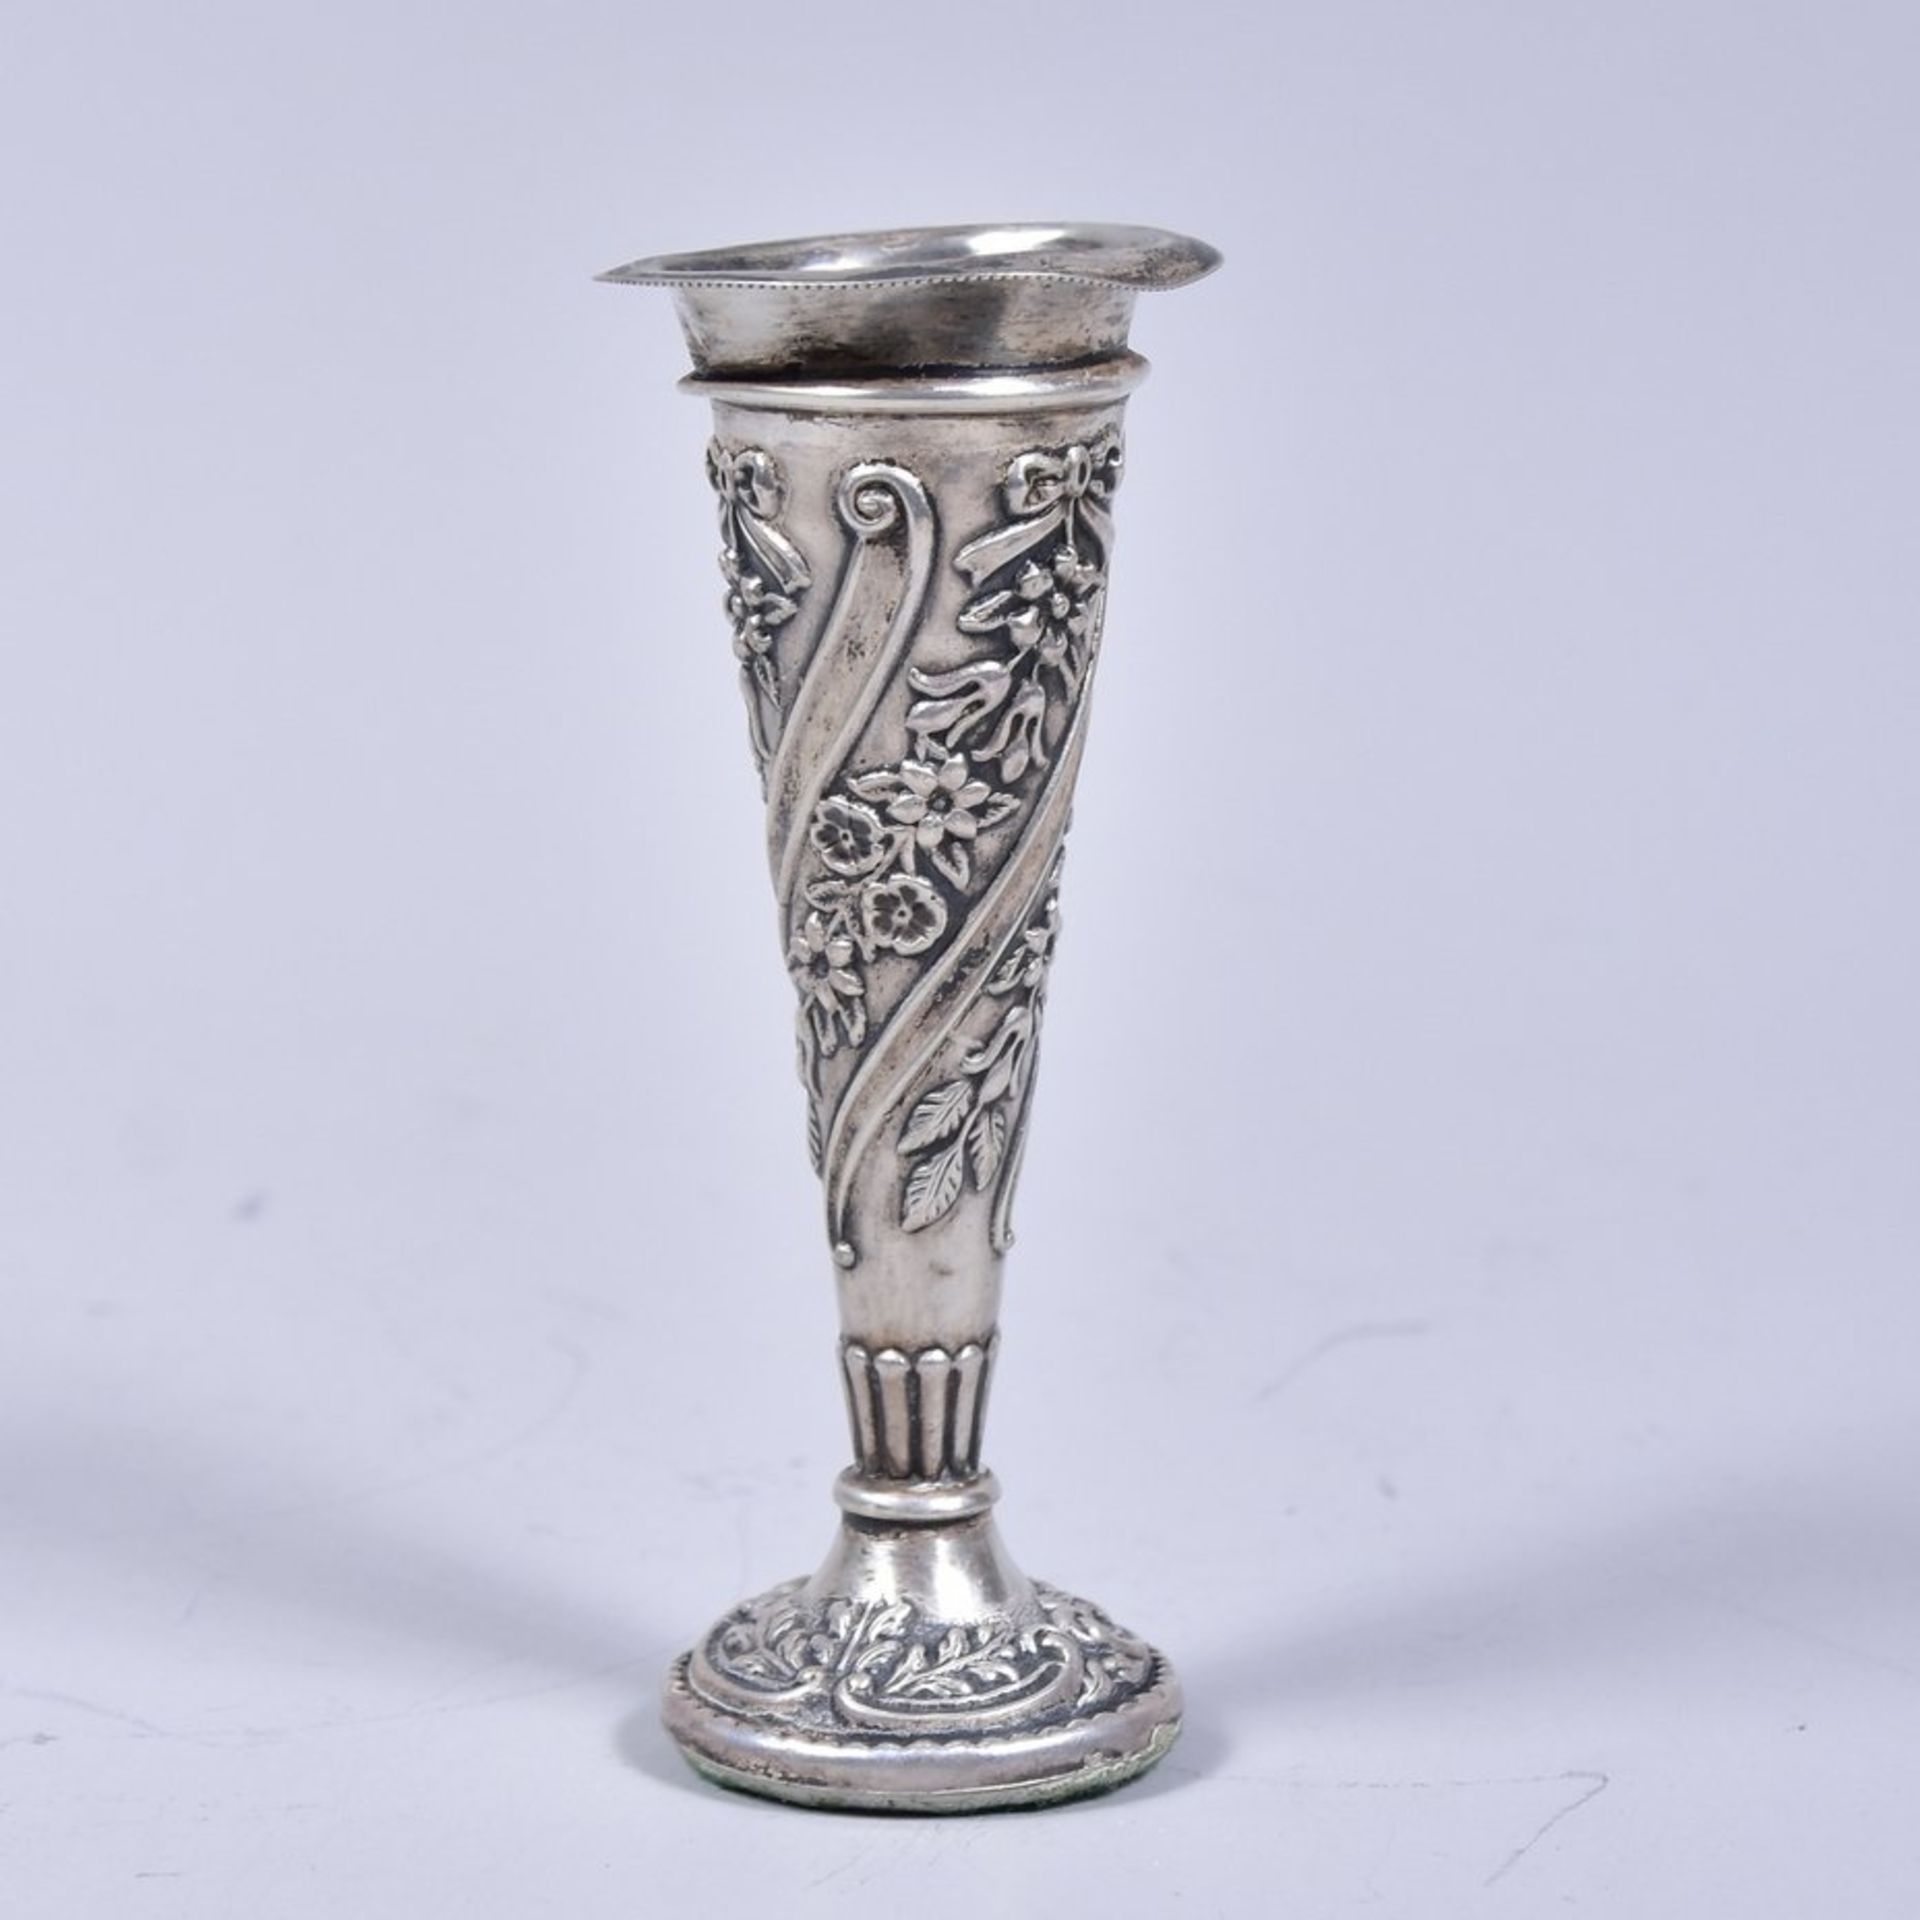 Trompeten-Silbervase, Silber punziert England Birmingham, um 1880, Silber floral getrieben, Stand